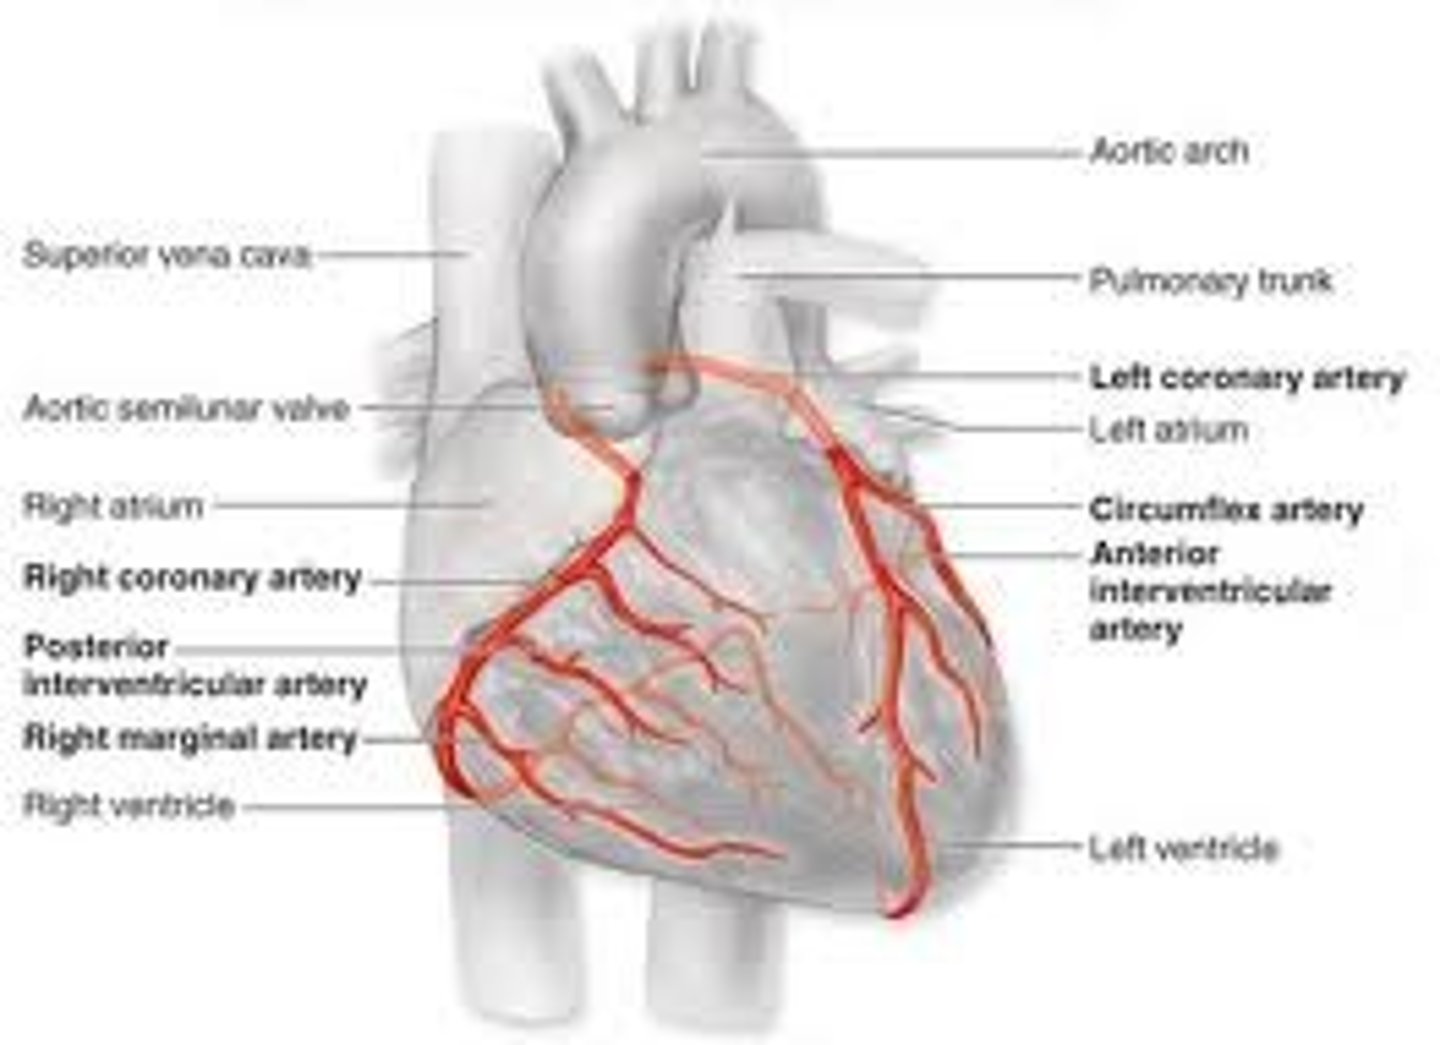 <p>coronary circulation: how blood transfers through heart & how blood supplies itself</p><p>->Left and right coronary arteries</p><p>->circumflex artery</p><p>->left anterior descending artery</p><p>(image shows it)</p>